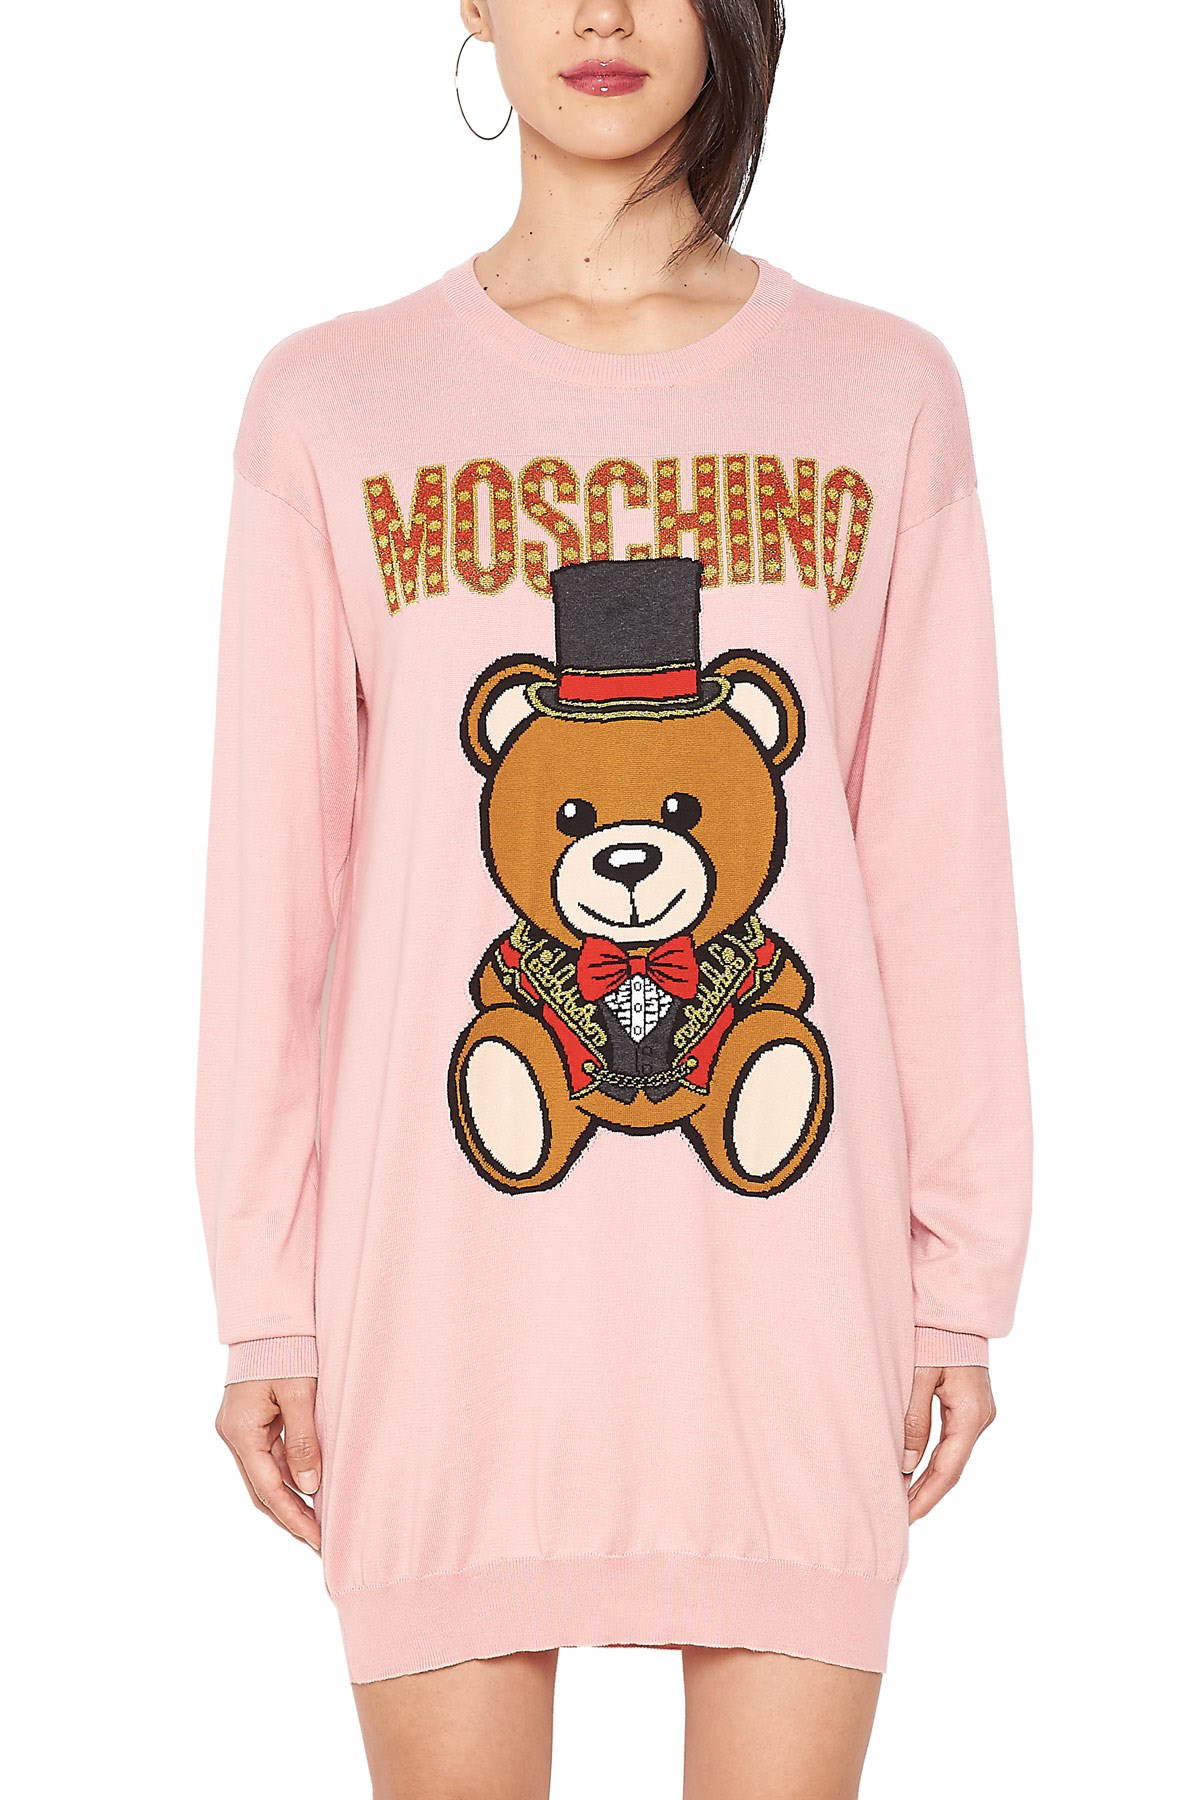 moschino pink sweater dress